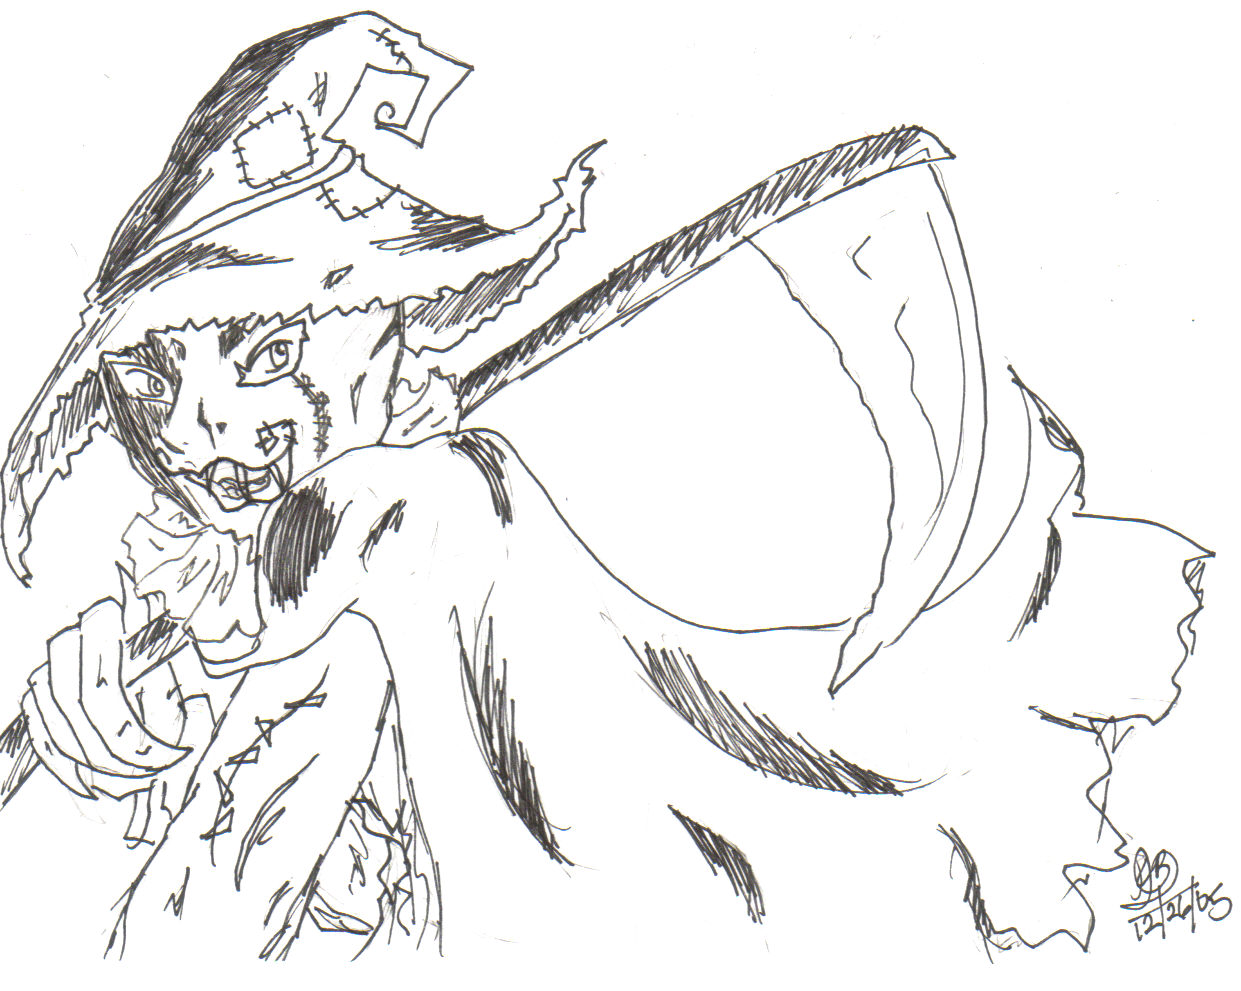 Scarecrow Strikes Back! by Lady_Scarecrow